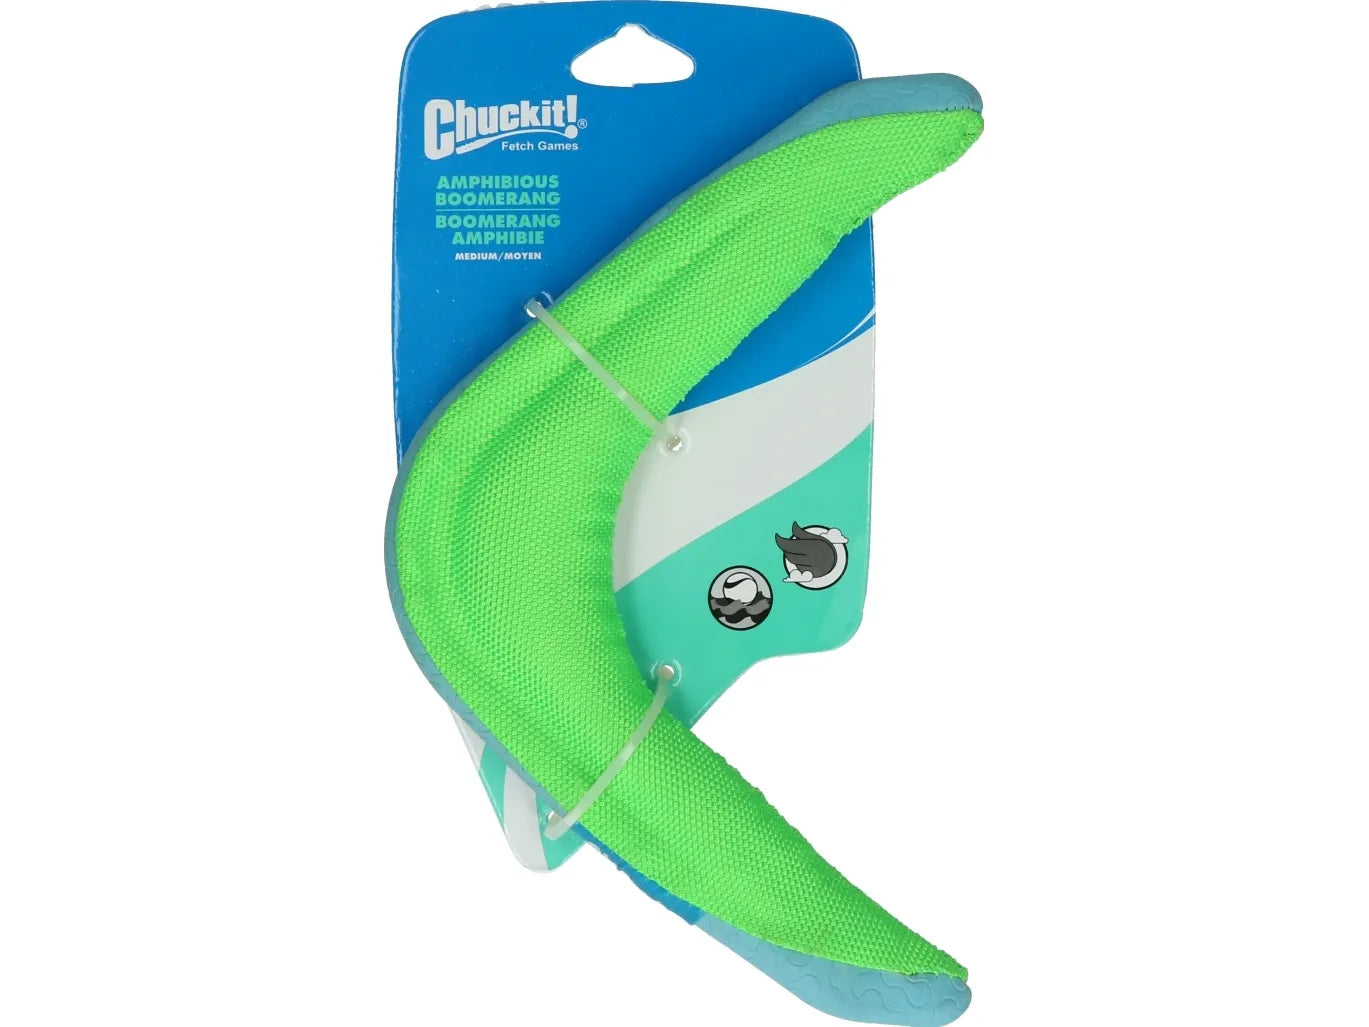 Chuckit boomerang grøn